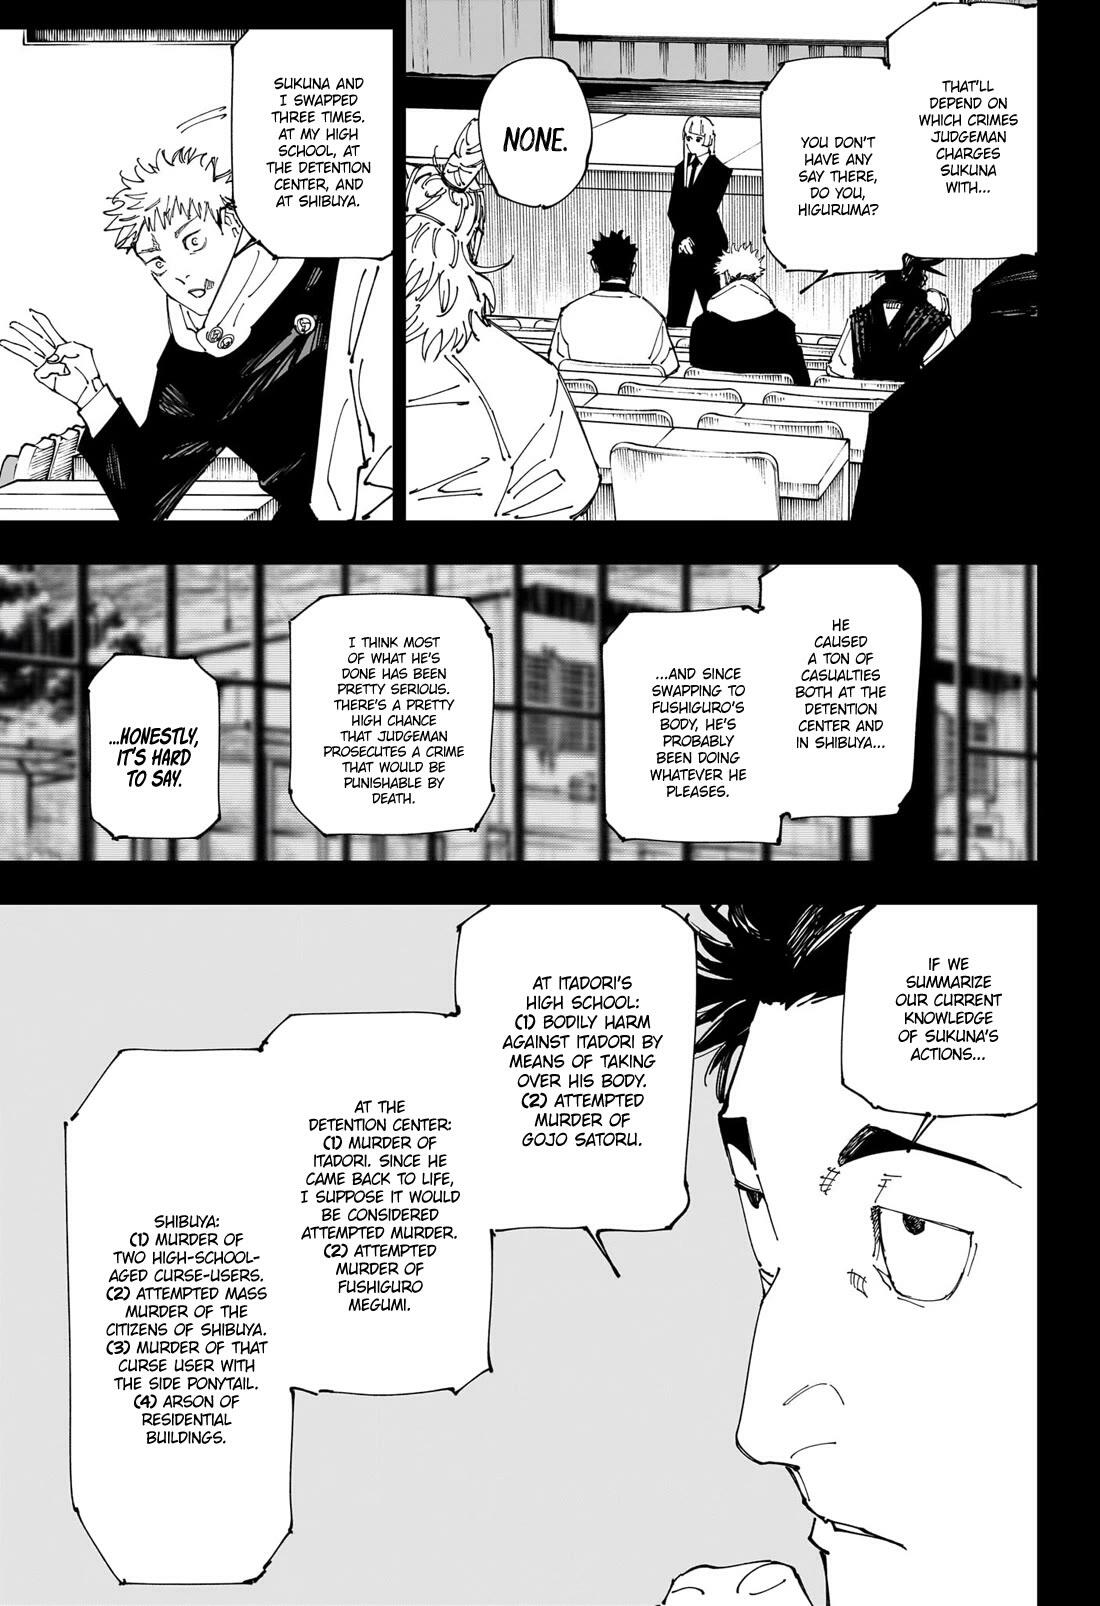 Jujutsu Kaisen Chapter 244: The Decisive Battle In The Uninhabited, Demon-Infested Shinjuku ⑯ page 6 - Mangakakalot